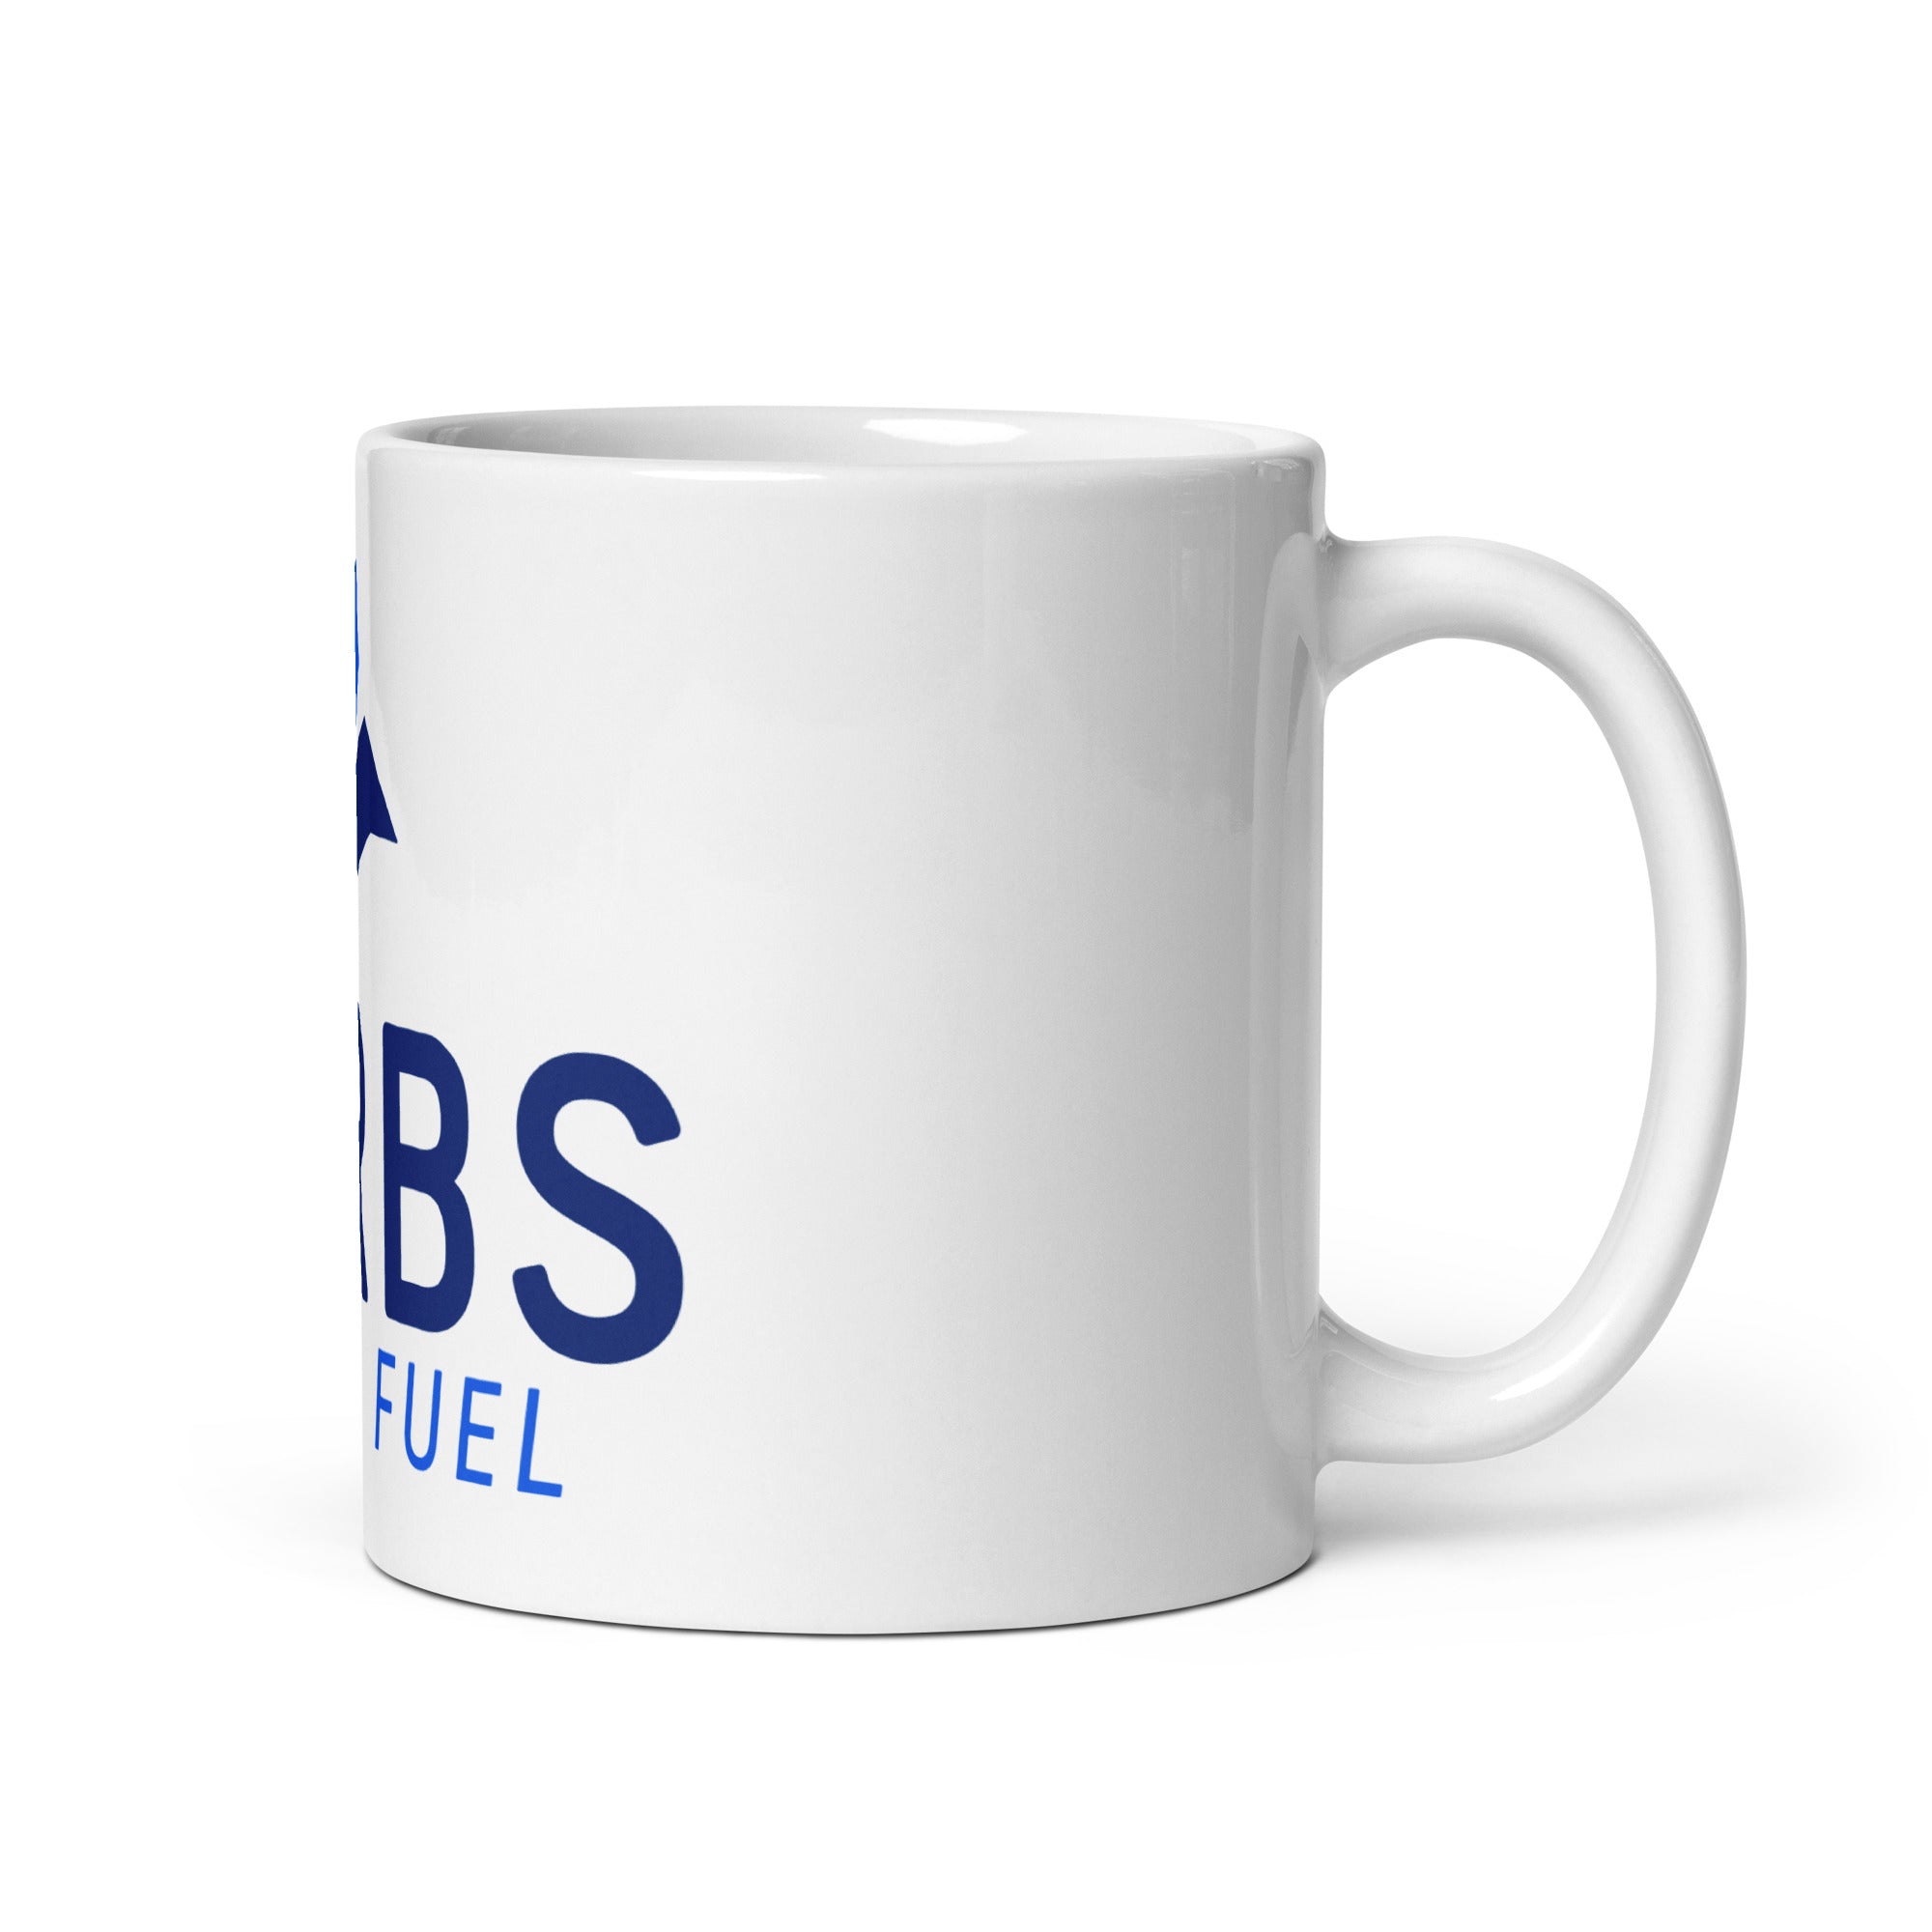 CARBS mug